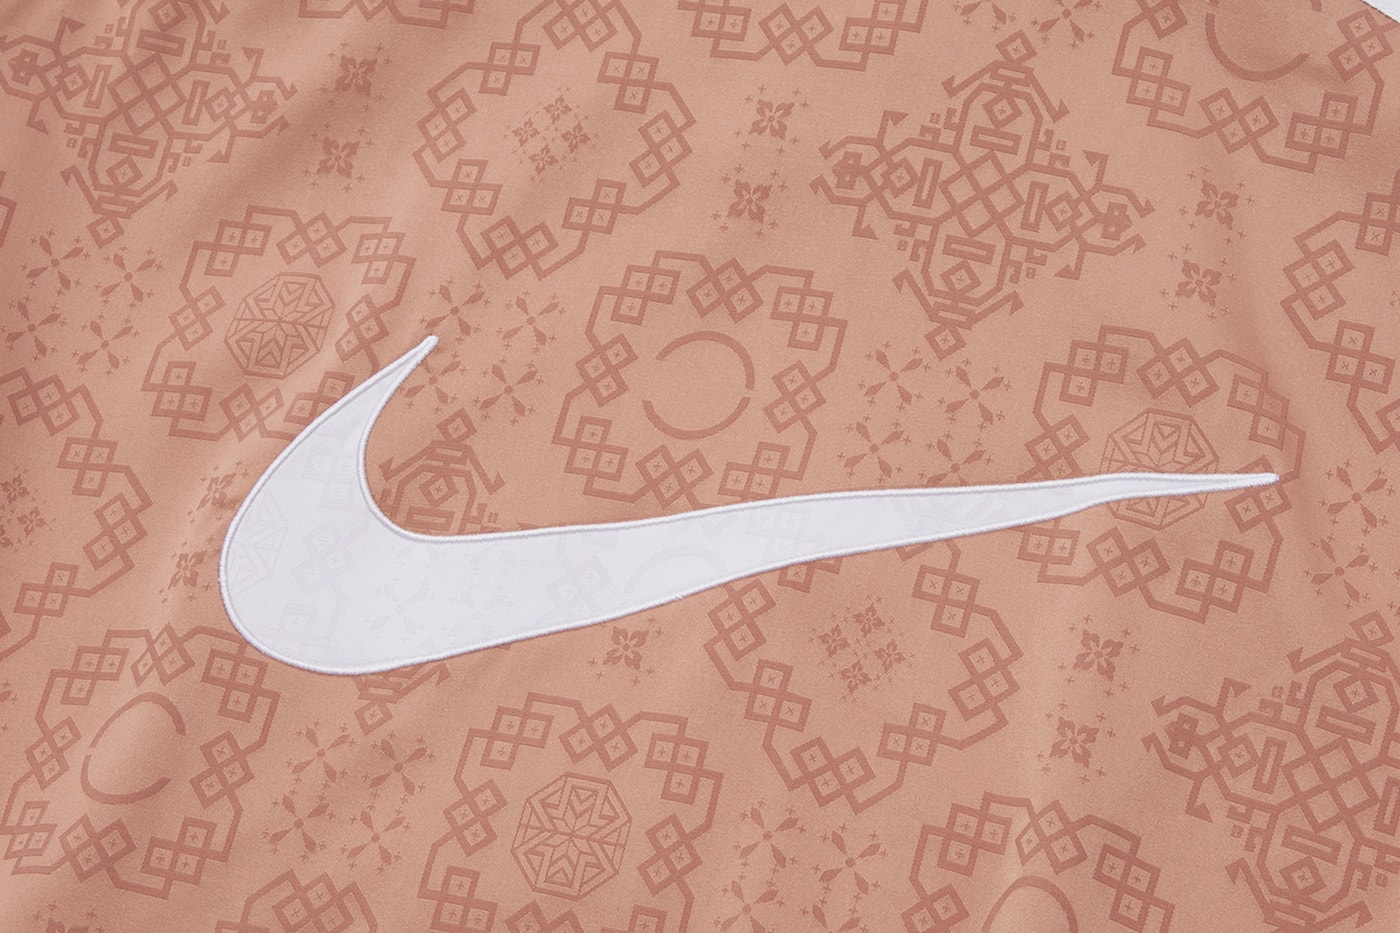 CLOT Nike Rose Gold Silk Royale Tracksuit Custom Shoebox Release Info Date Buy Price 